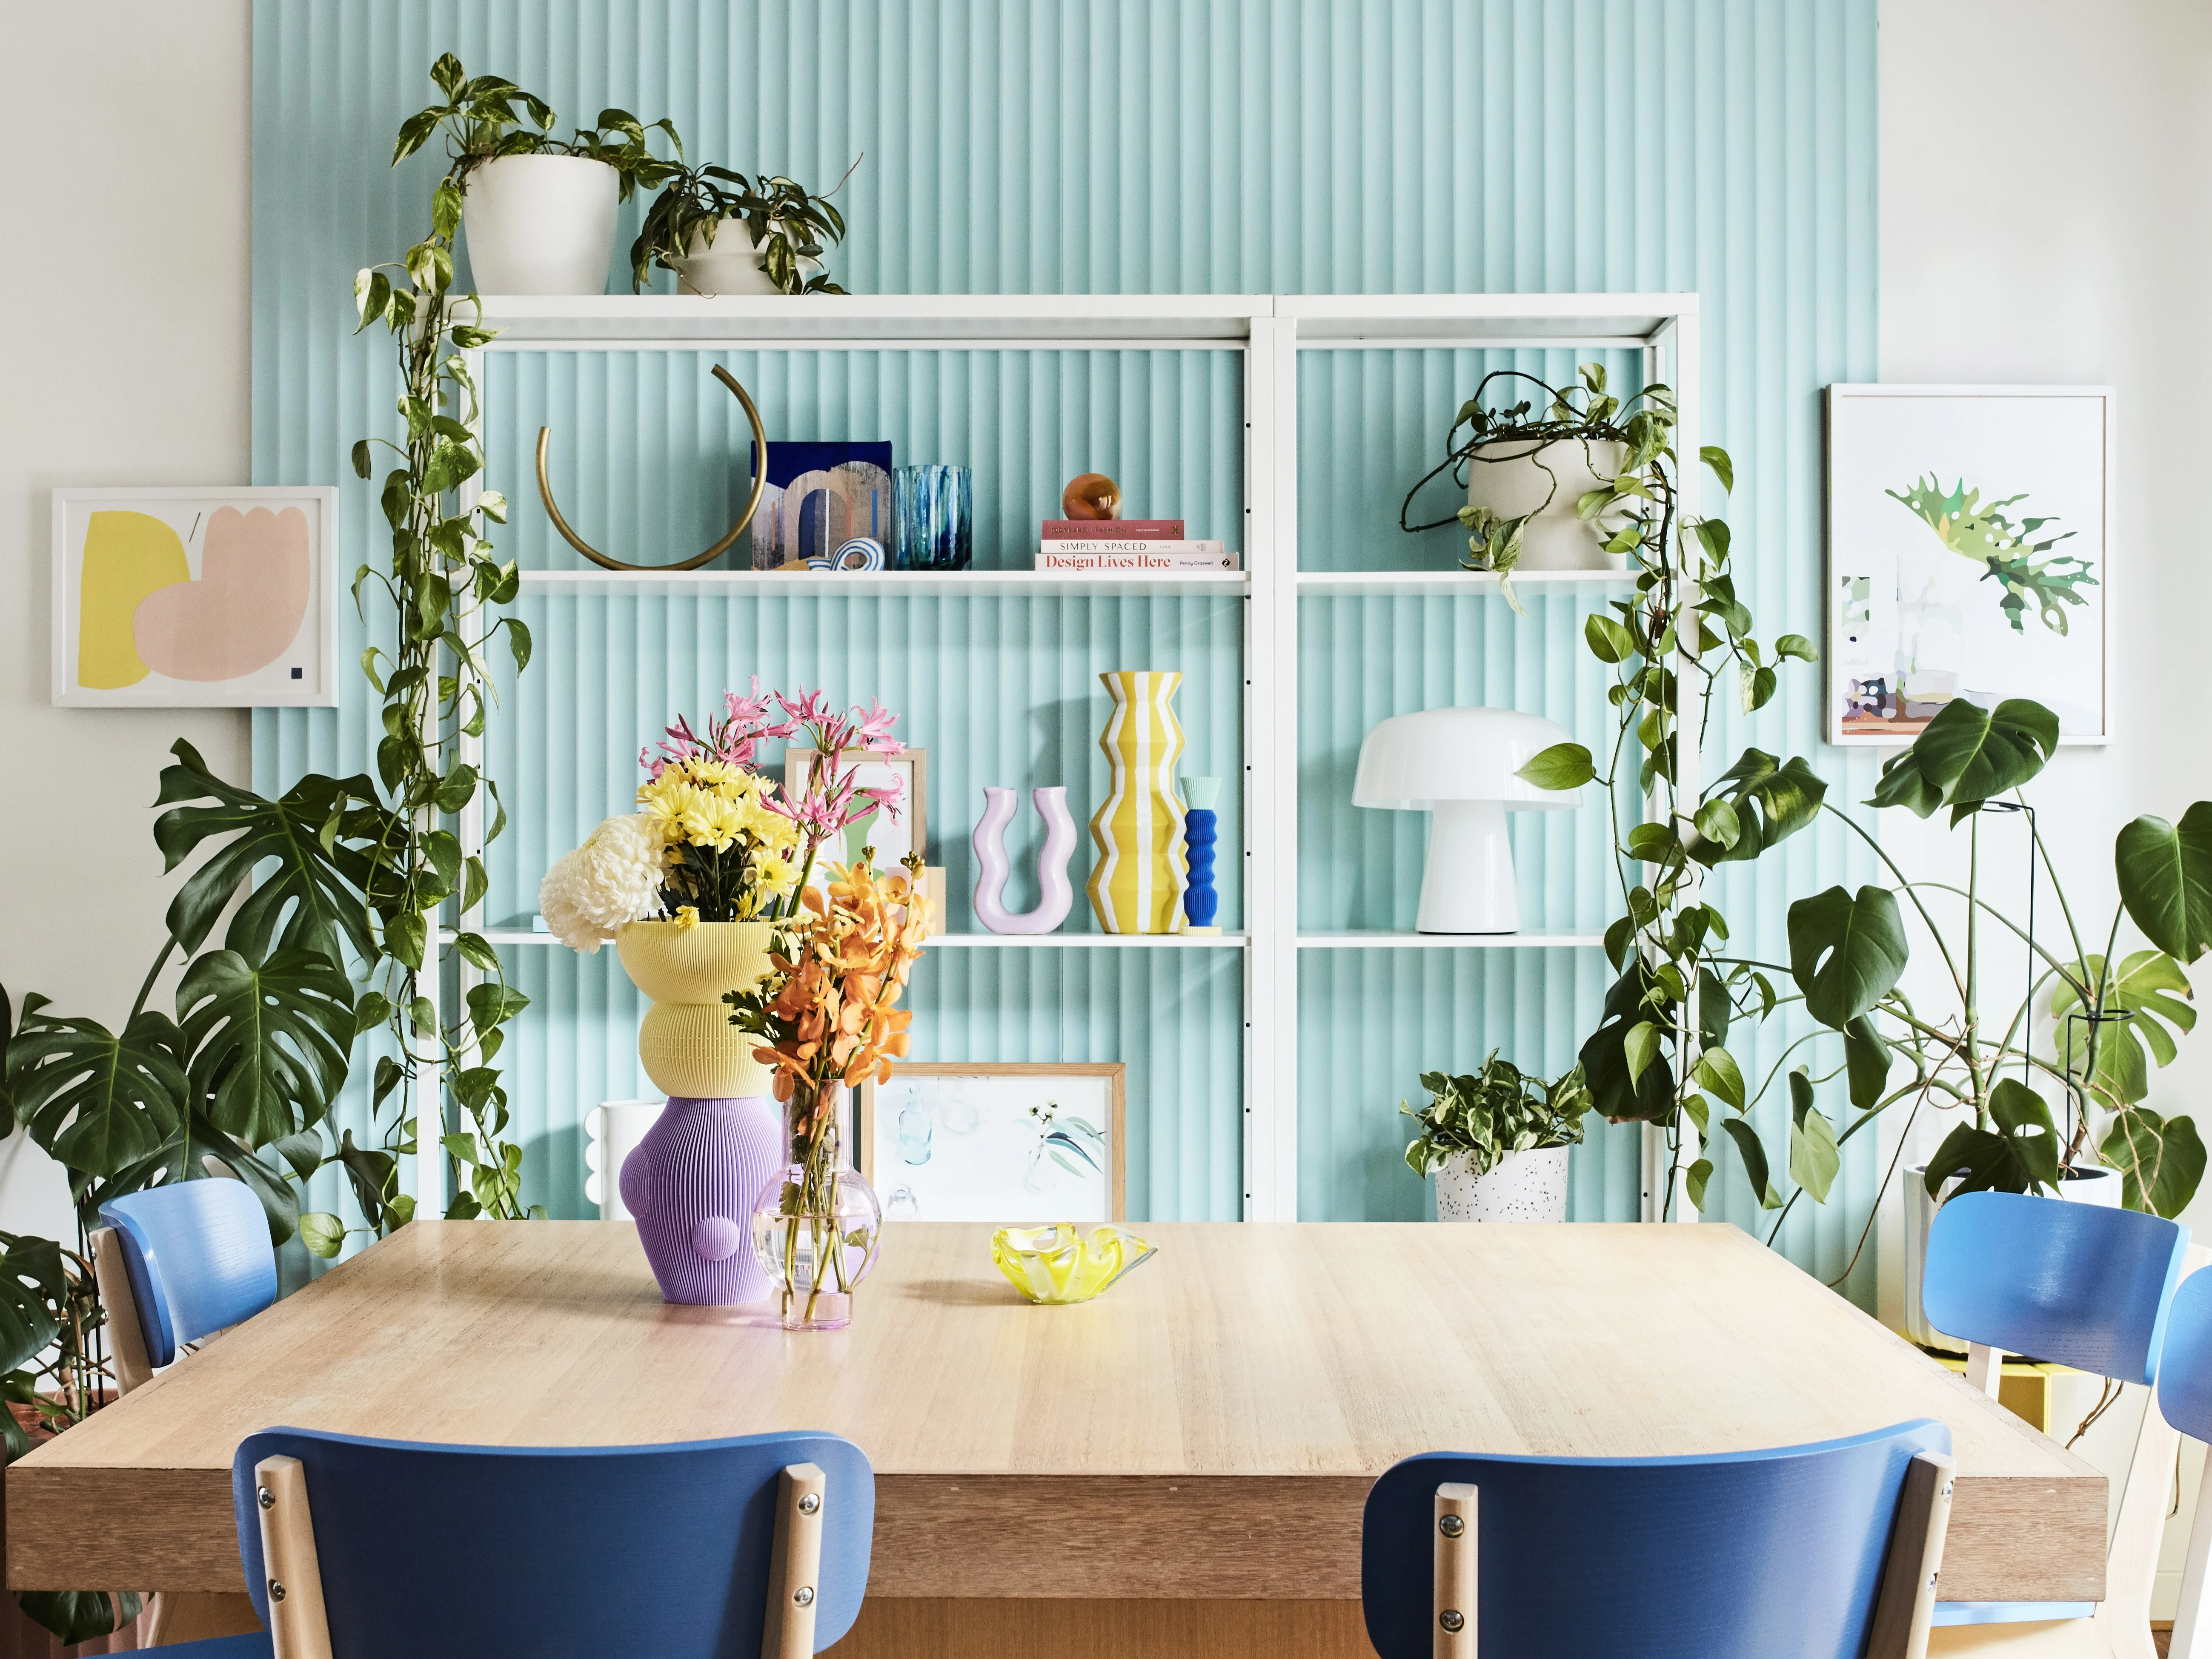 Bree Leech
Wonder palette
Interior
Dining room 
Shelves
Plants
Horizontal